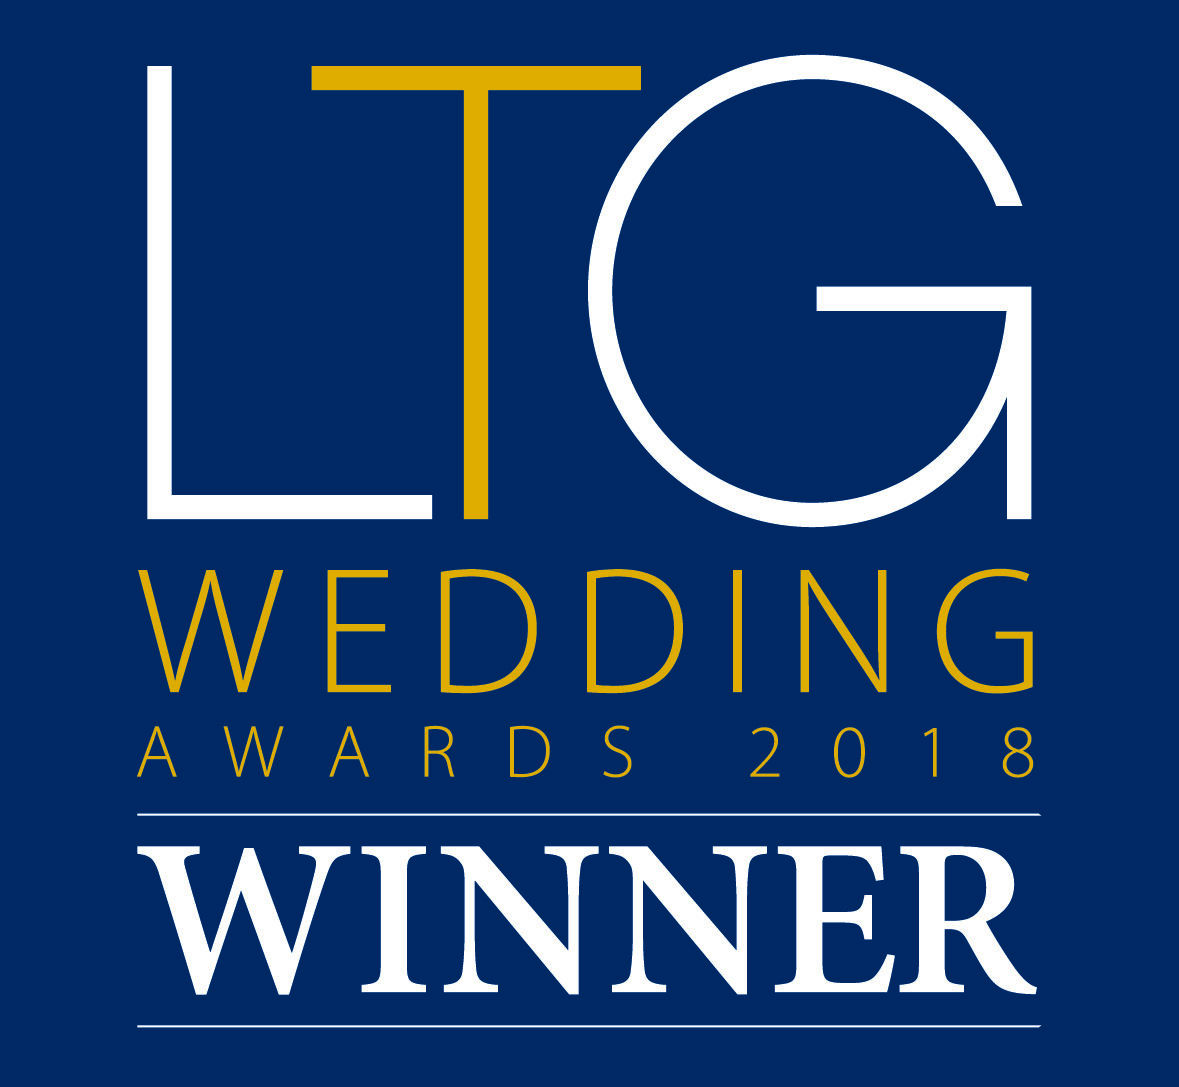 LTG Wedding Awards 2018 winners logo (1).jpg